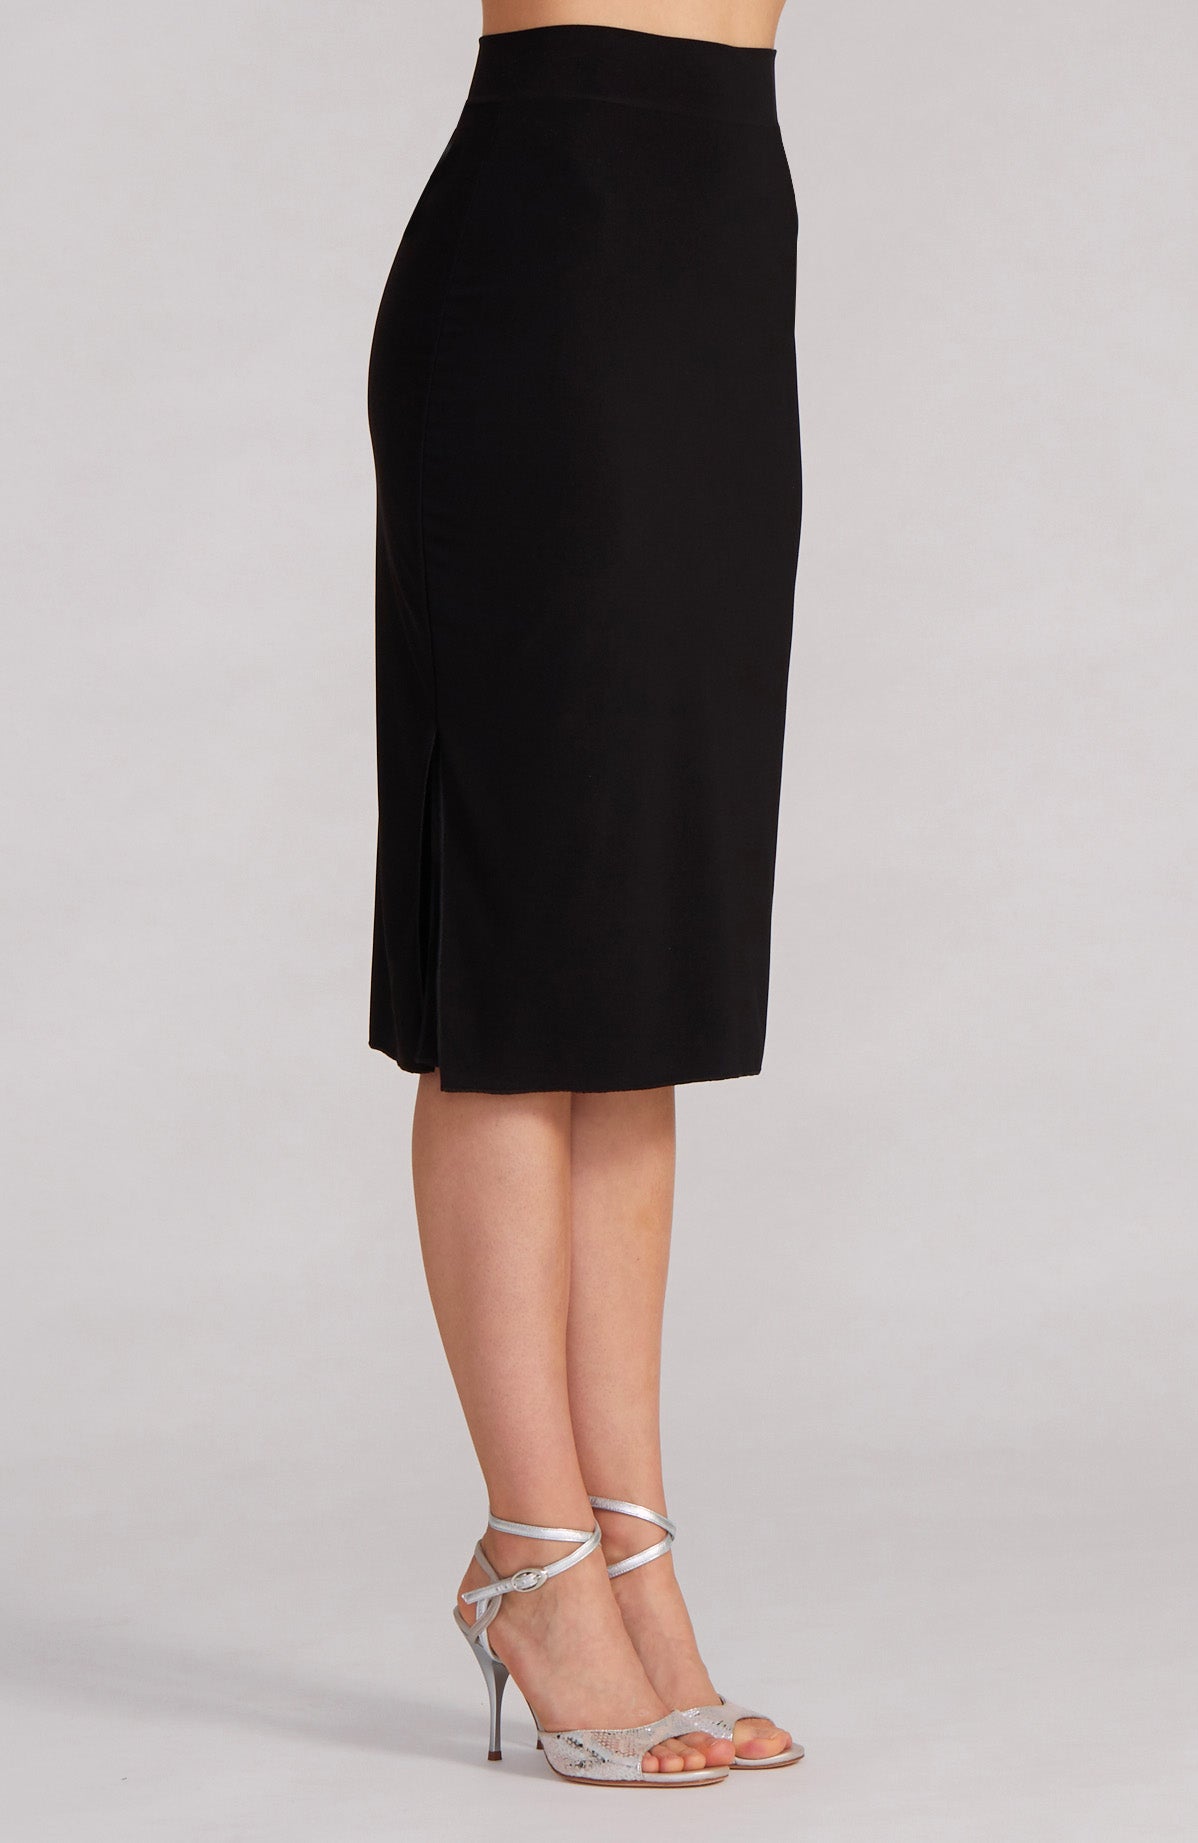 MIA - Black Tango Skirt with Side Slits